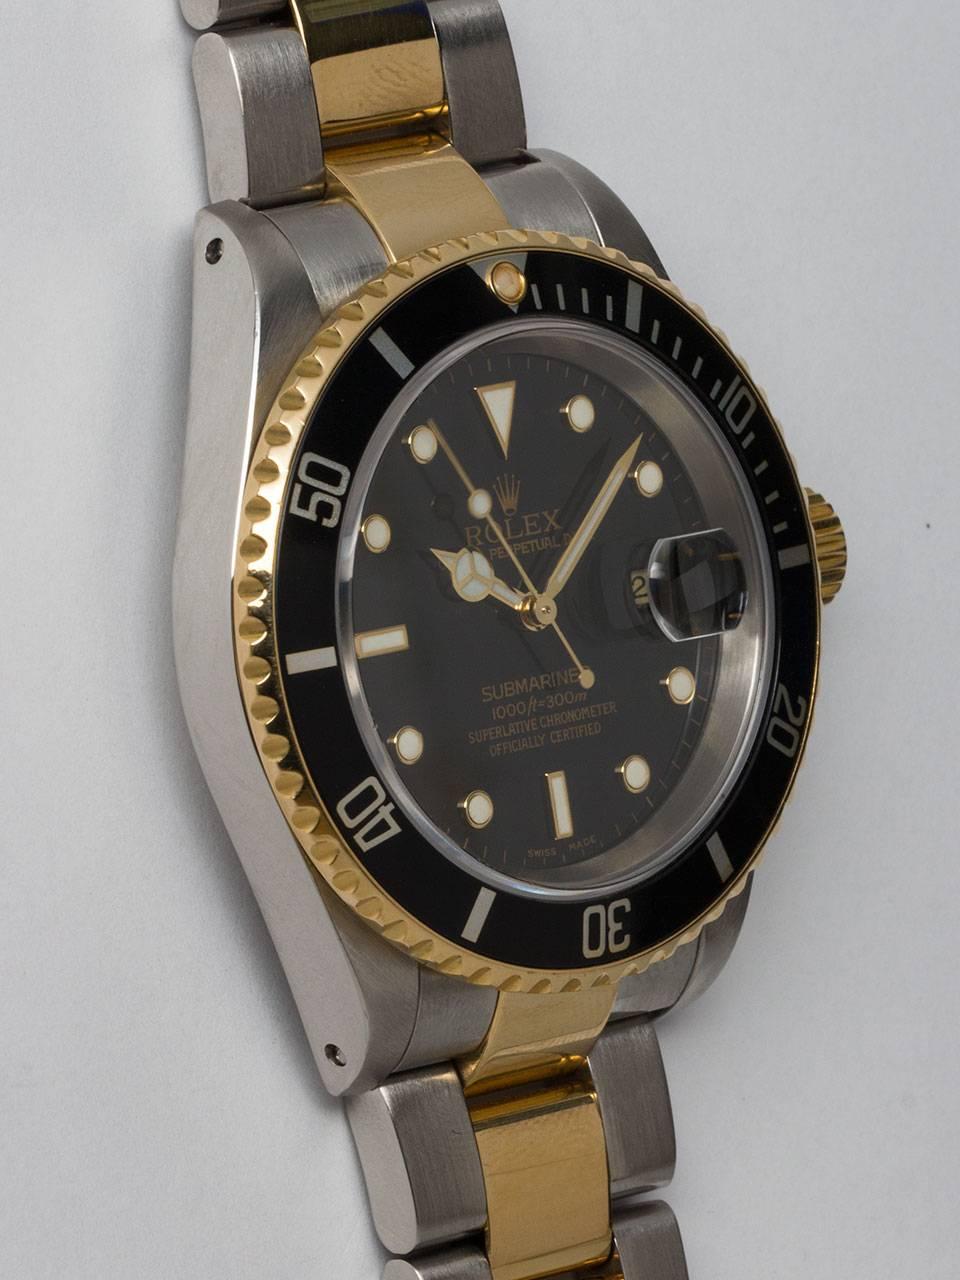 Contemporary Rolex Yellow Gold Stainless Steel Submariner Wristwatch Ref 16613 2005